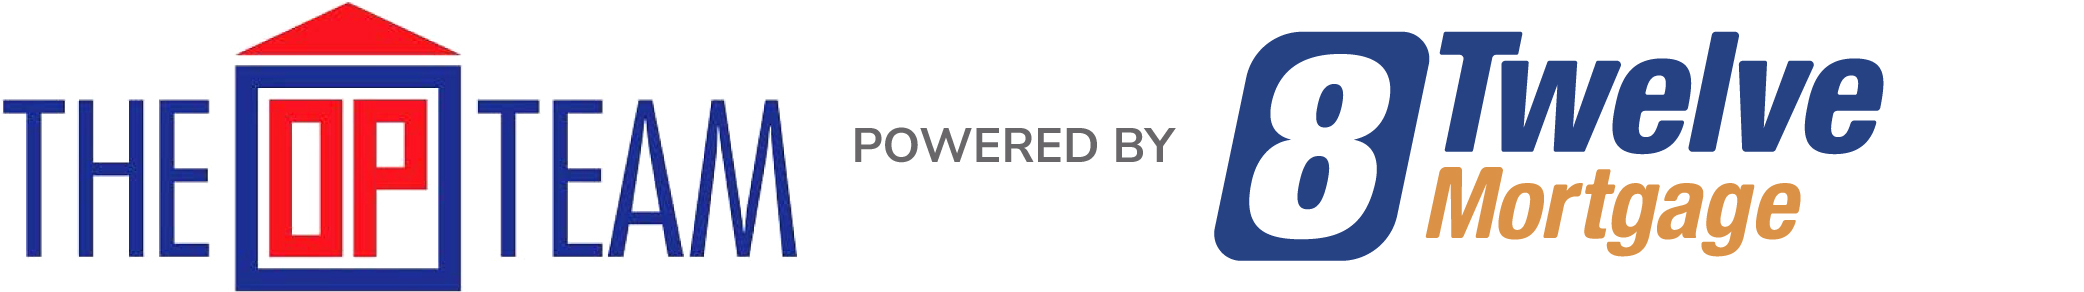 8Twelve-Mortgage_Rebrand-Partnership-Powered-By-Logos_The-OP-Team_07-23